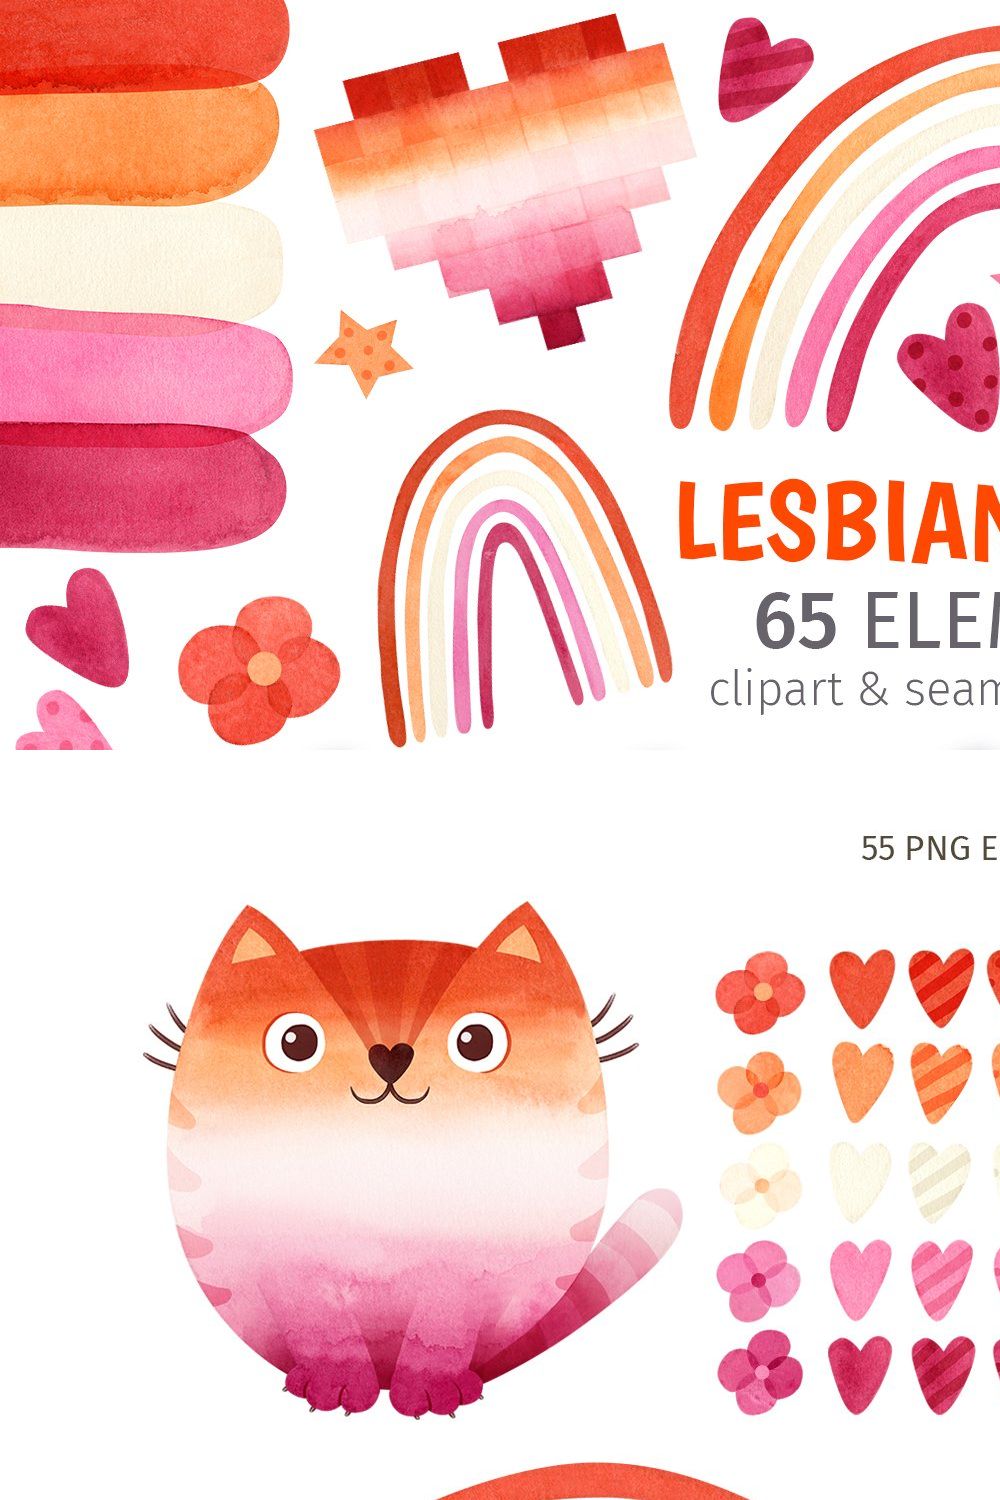 Lesbian pride clipart & patterns pinterest preview image.